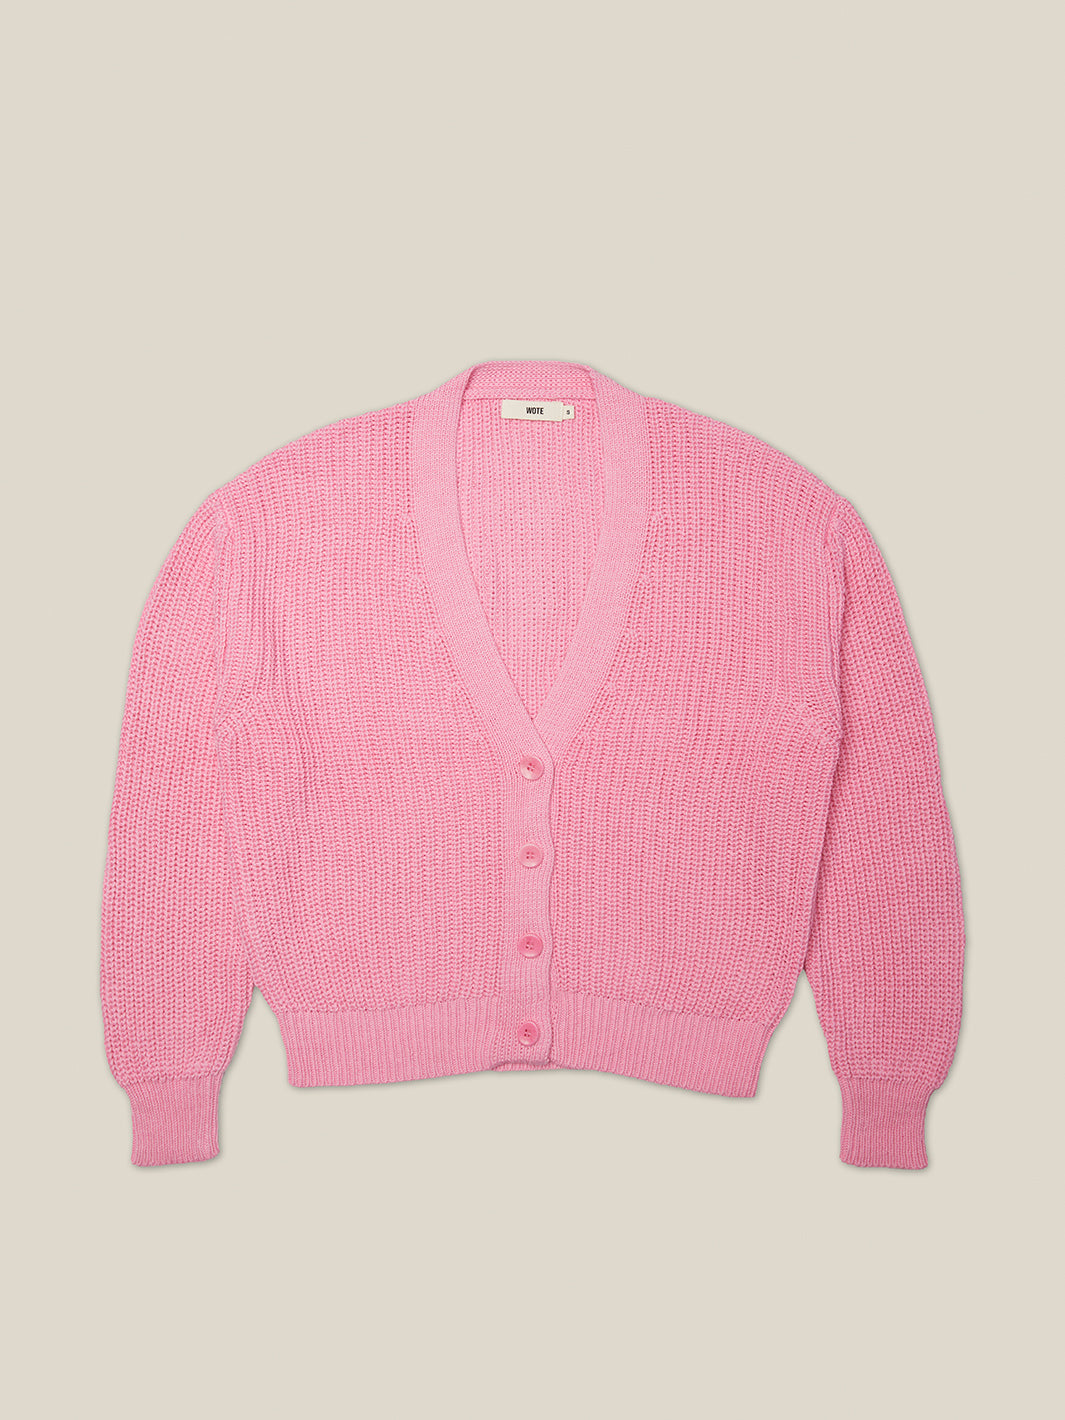 Strick Cardigan Frauen rosa organic Cotton GOTS Zertifikat made in Italy